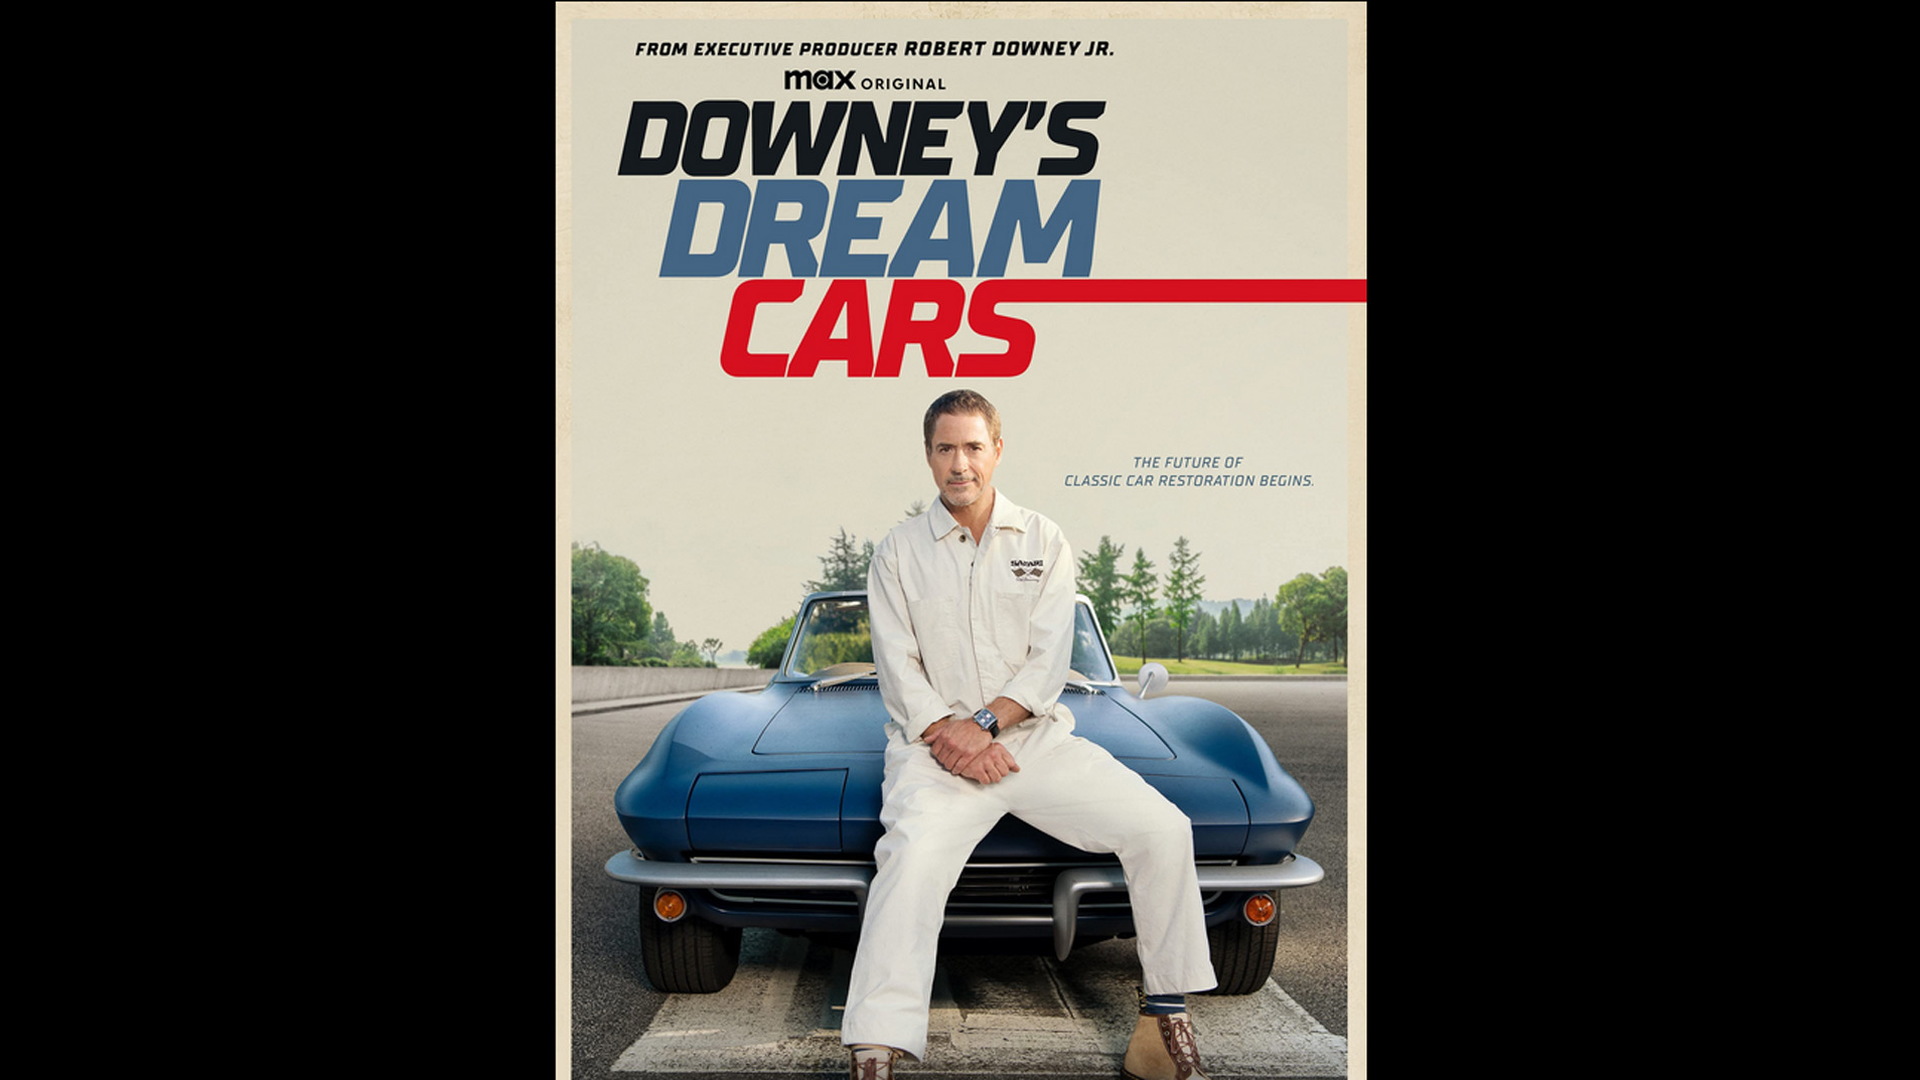 Robert Downey Jr.'s "Downey's Dream Cars"